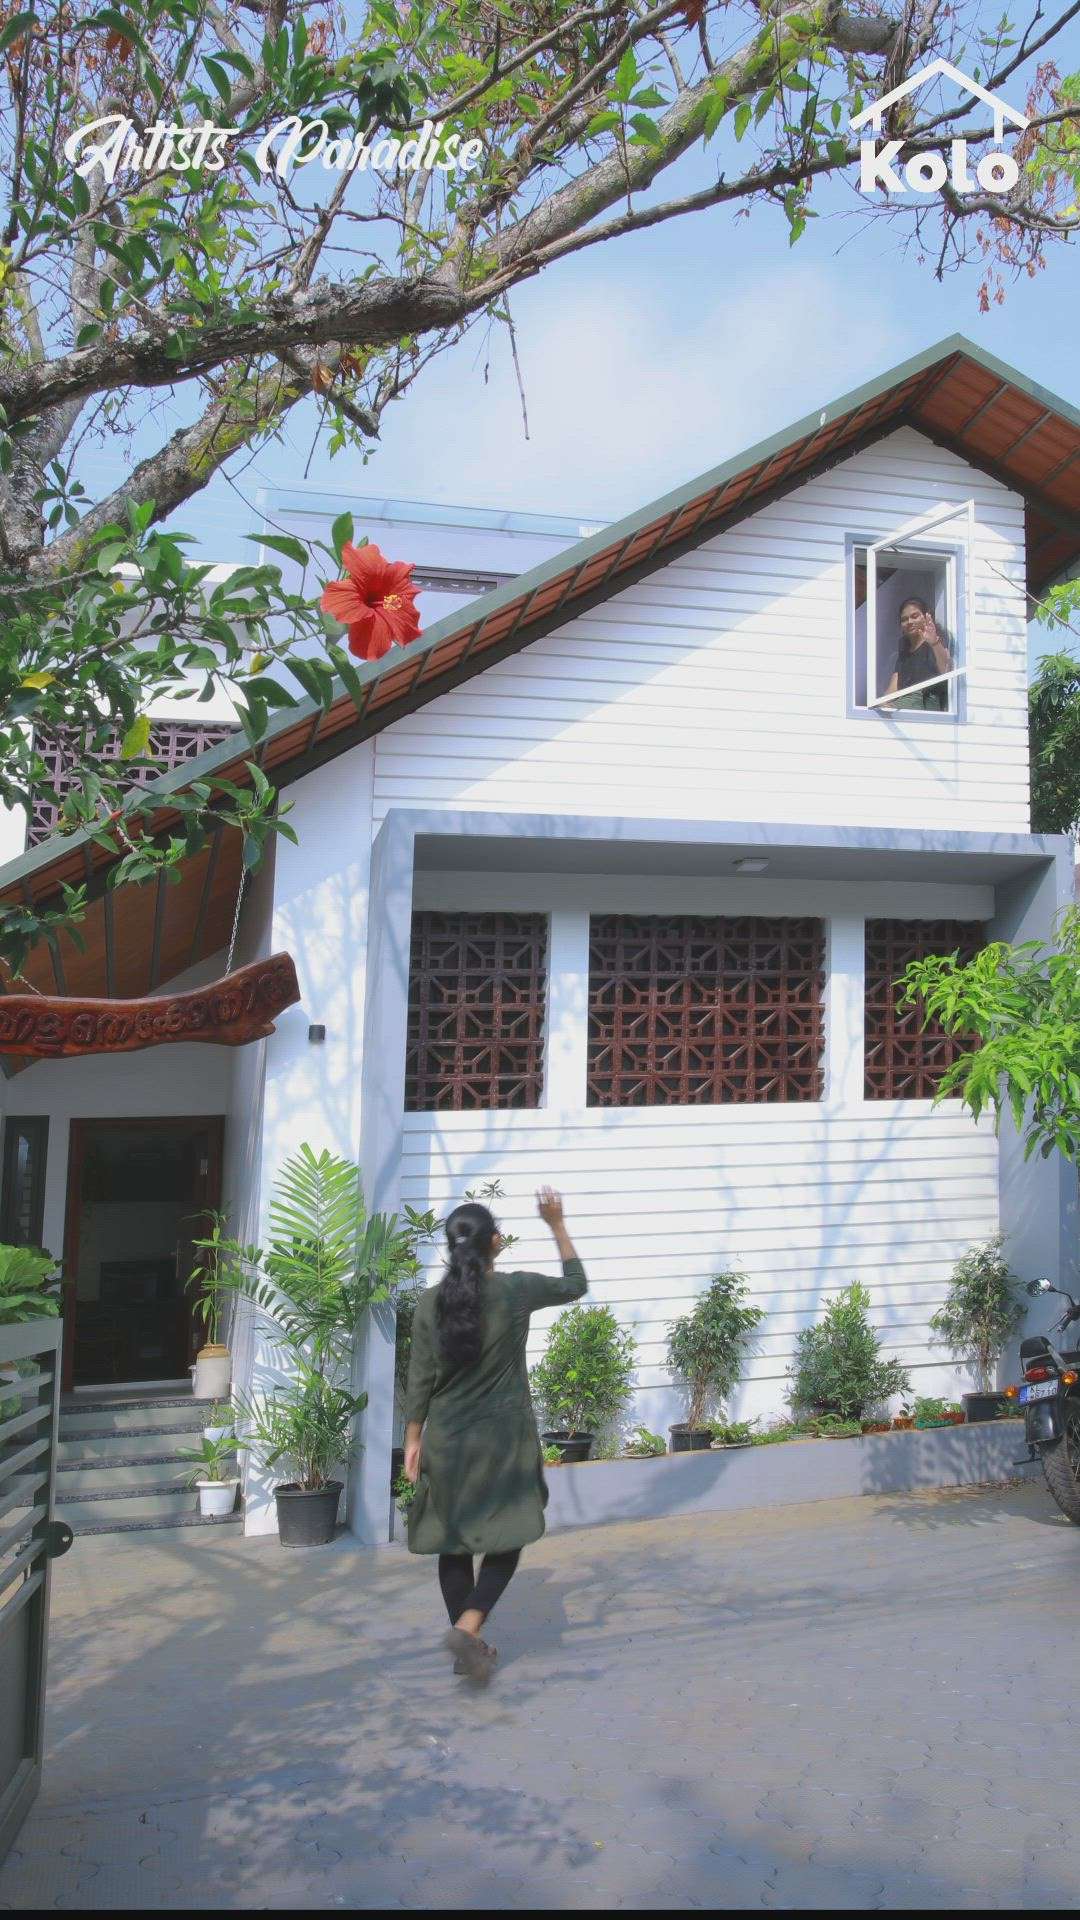 THE ARTIST'S HOUSE | 38 Lakhs

Green concept house in 4.5 cents designed at the heart of Ernakulam
Budget : 38 lakhs
Project area :1720 sqft

Design team @linear_trails_architecture
@rhea_chungath
@_diyageorge_
@ar_janphilip
Whatsaap at :62825 82465

Photo credits : @unlimitedtales

Client: T S Asha Devi, @chandumeghanadan @meghanadan

Kolo - India’s Largest Home Construction Community :house:

#home #keralahouse #residence #residencedesign #house #koloapp #keralagram #reelitfeelit #keralagodsowncountry #homedecor #homedesign #keralahomedesignz #keralavibes #instagood #interiordesign #interior #interiordesigner #homedecoration #homedesignideas #keralahomes #homedecor #homes #traditional #kerala #homesweethome #architecturedesign #architecture #keralaarchitecture